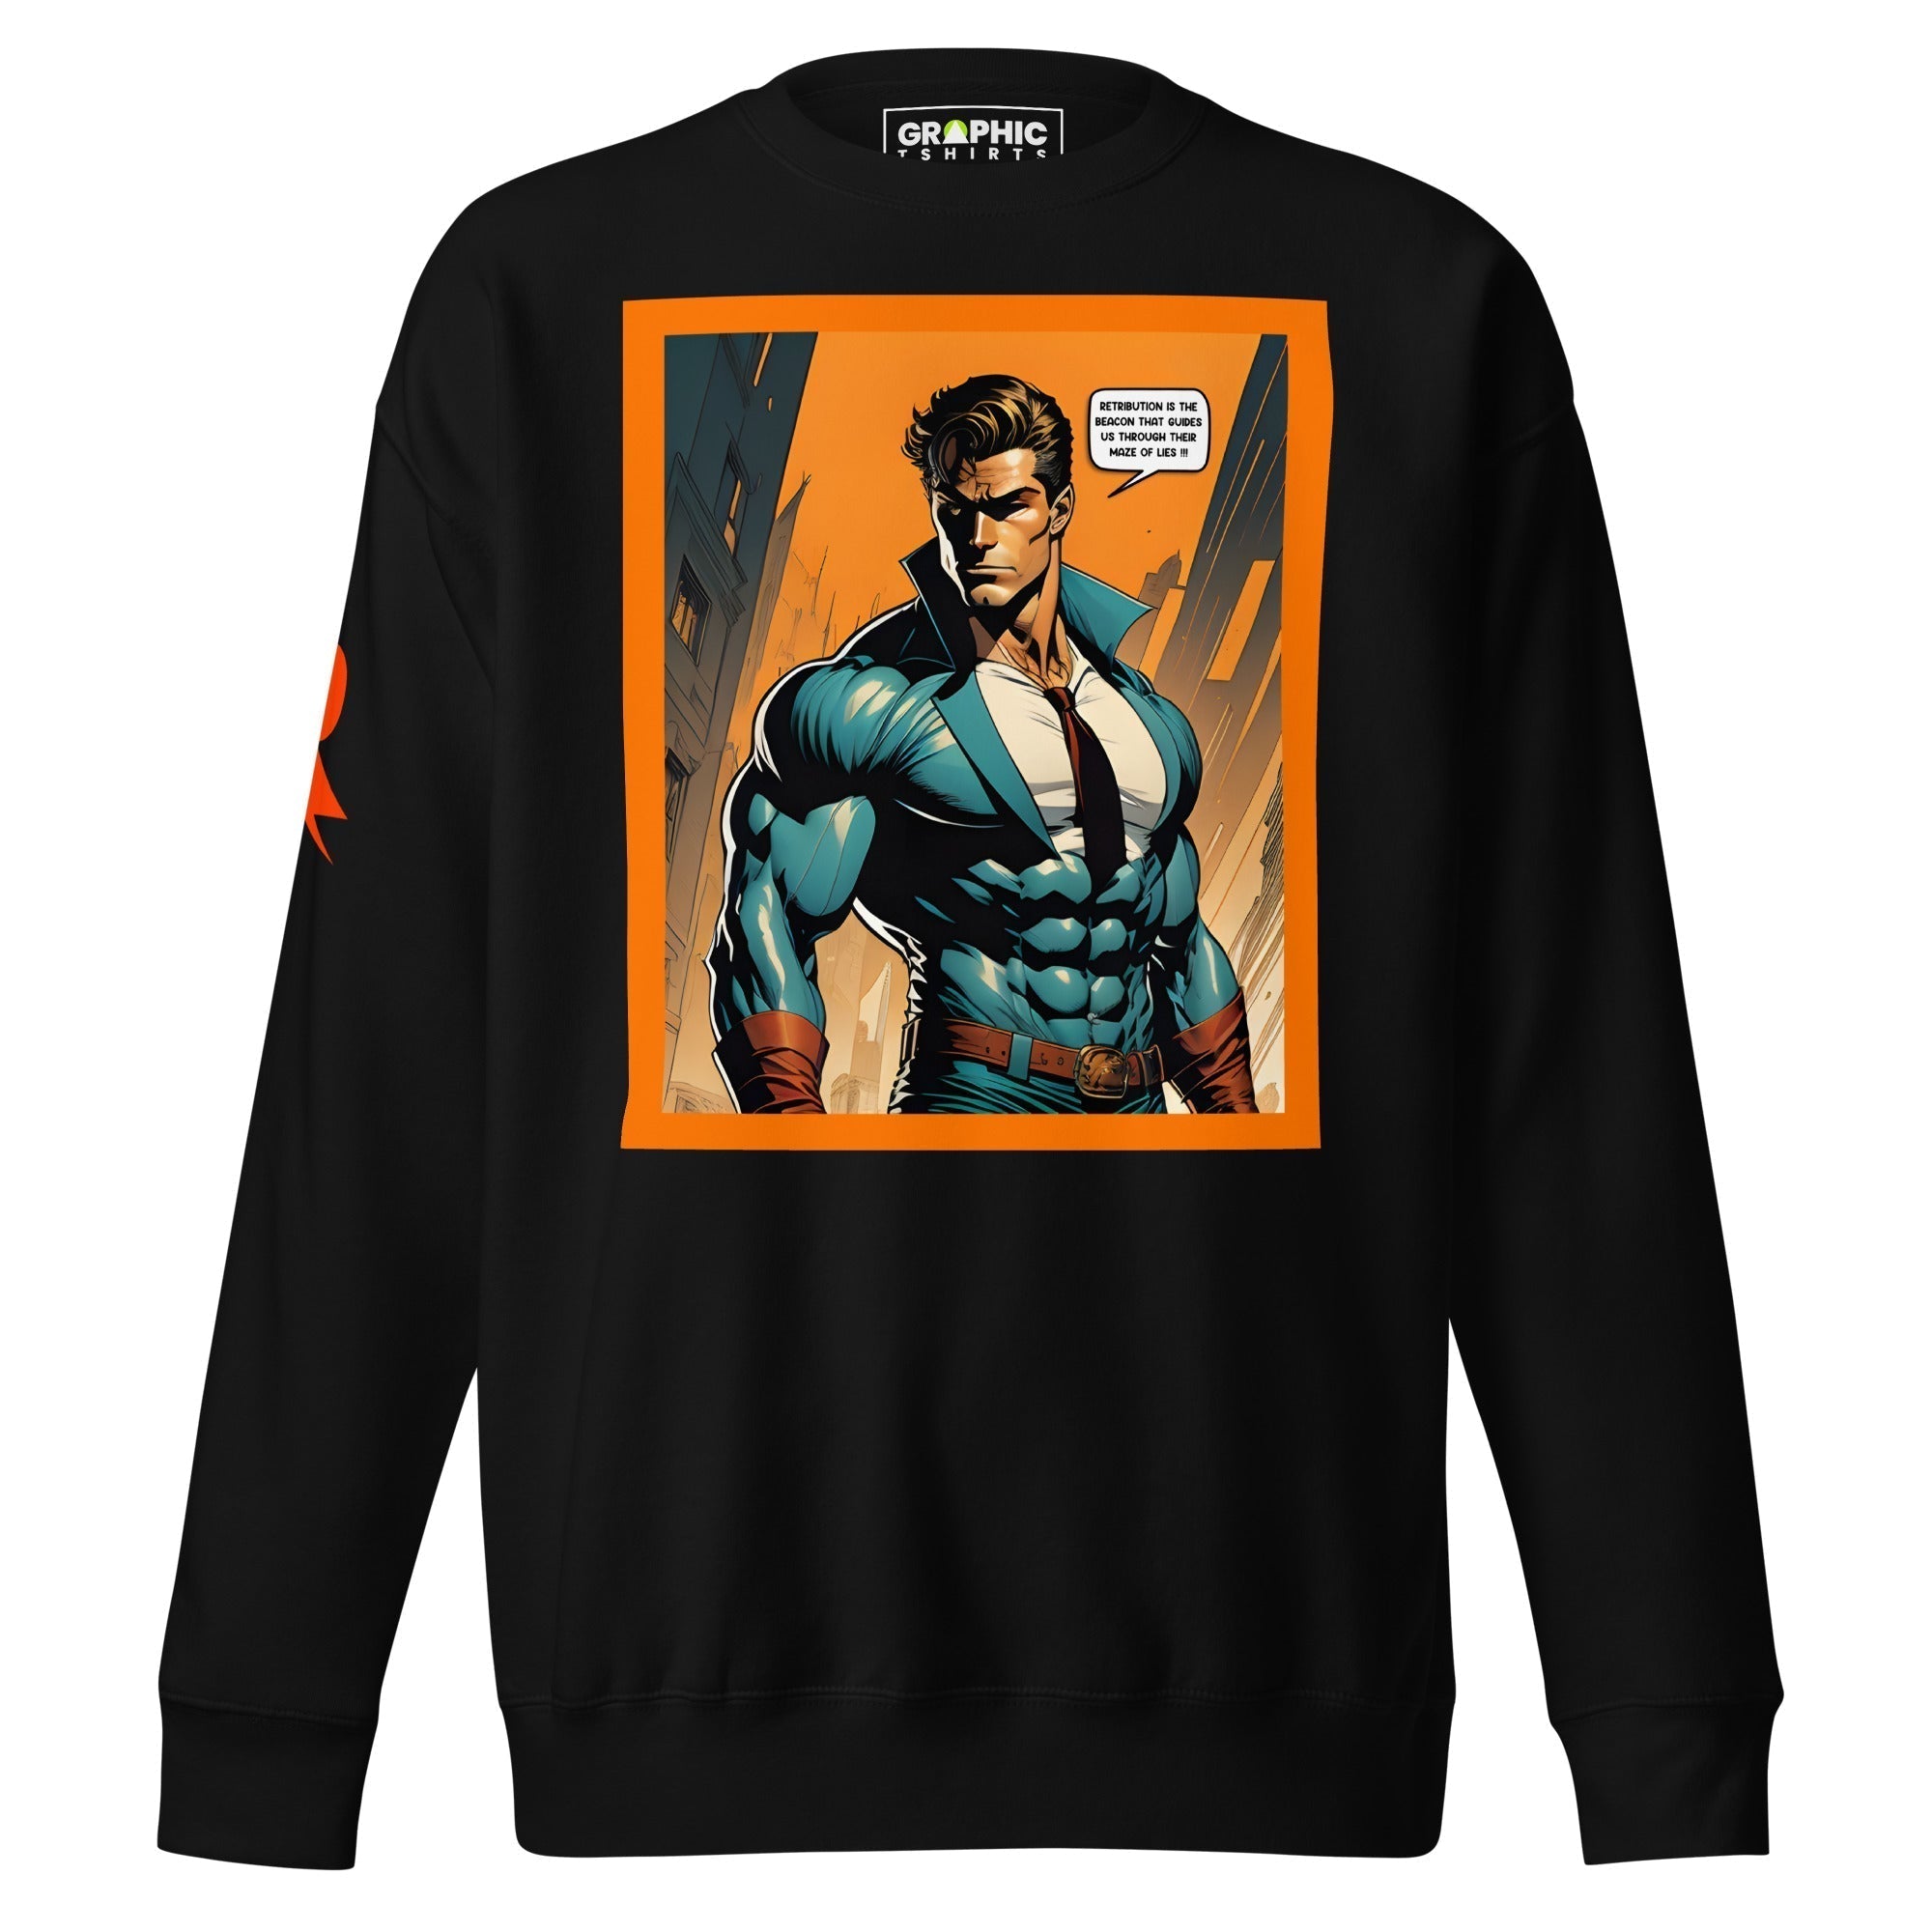 Unisex Premium Sweatshirt - Retribution: Heroes Unleashed v.67 - GRAPHIC T-SHIRTS